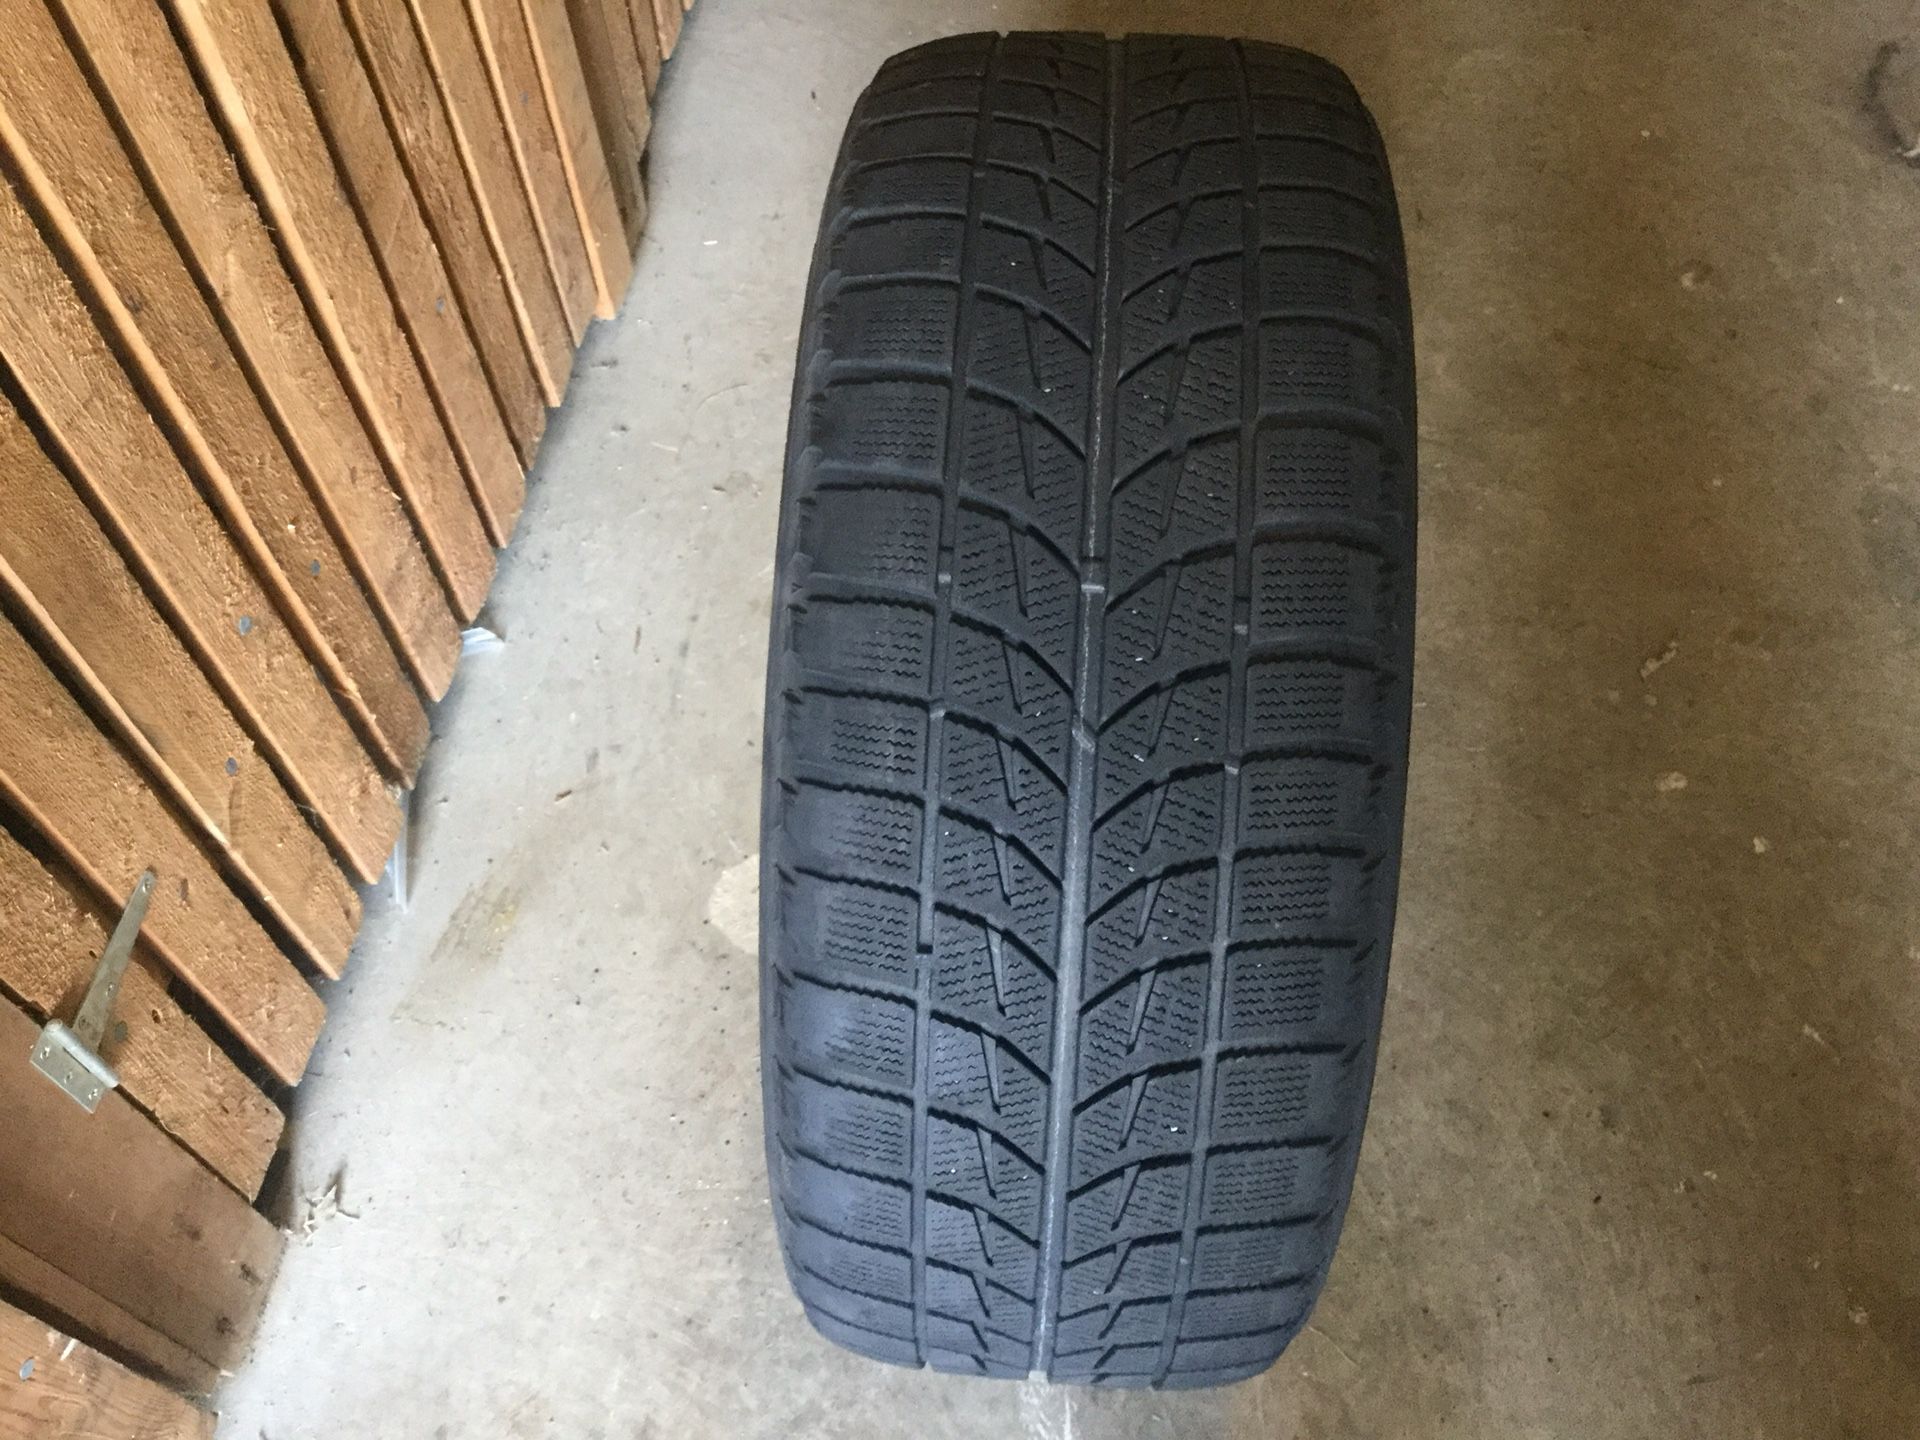 Rims with snow tires asking 250 $ bucks